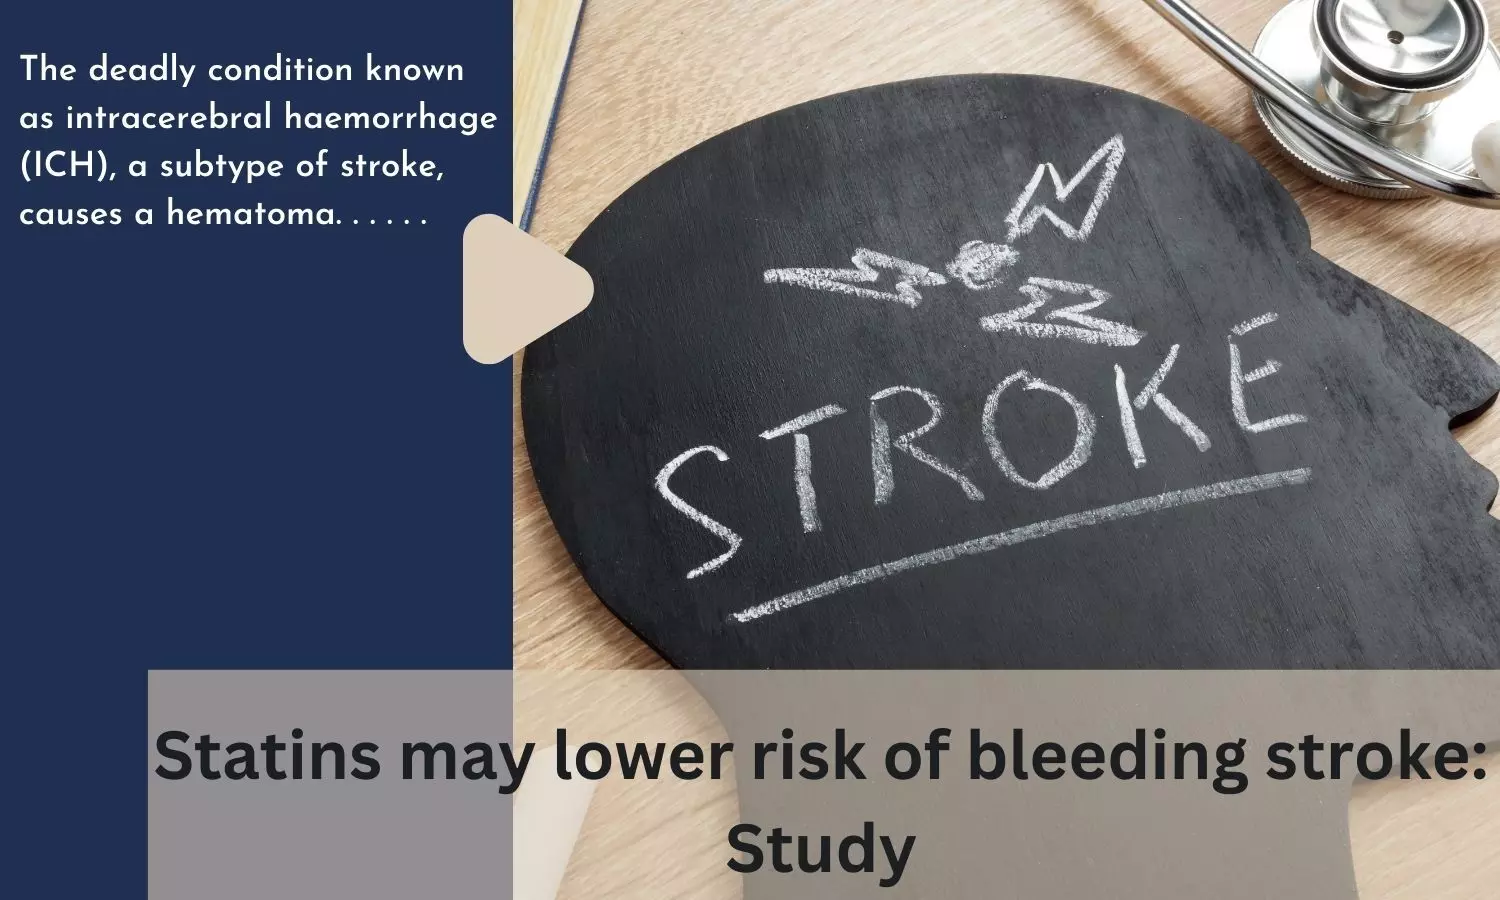 Statins may lower risk of bleeding stroke: Study